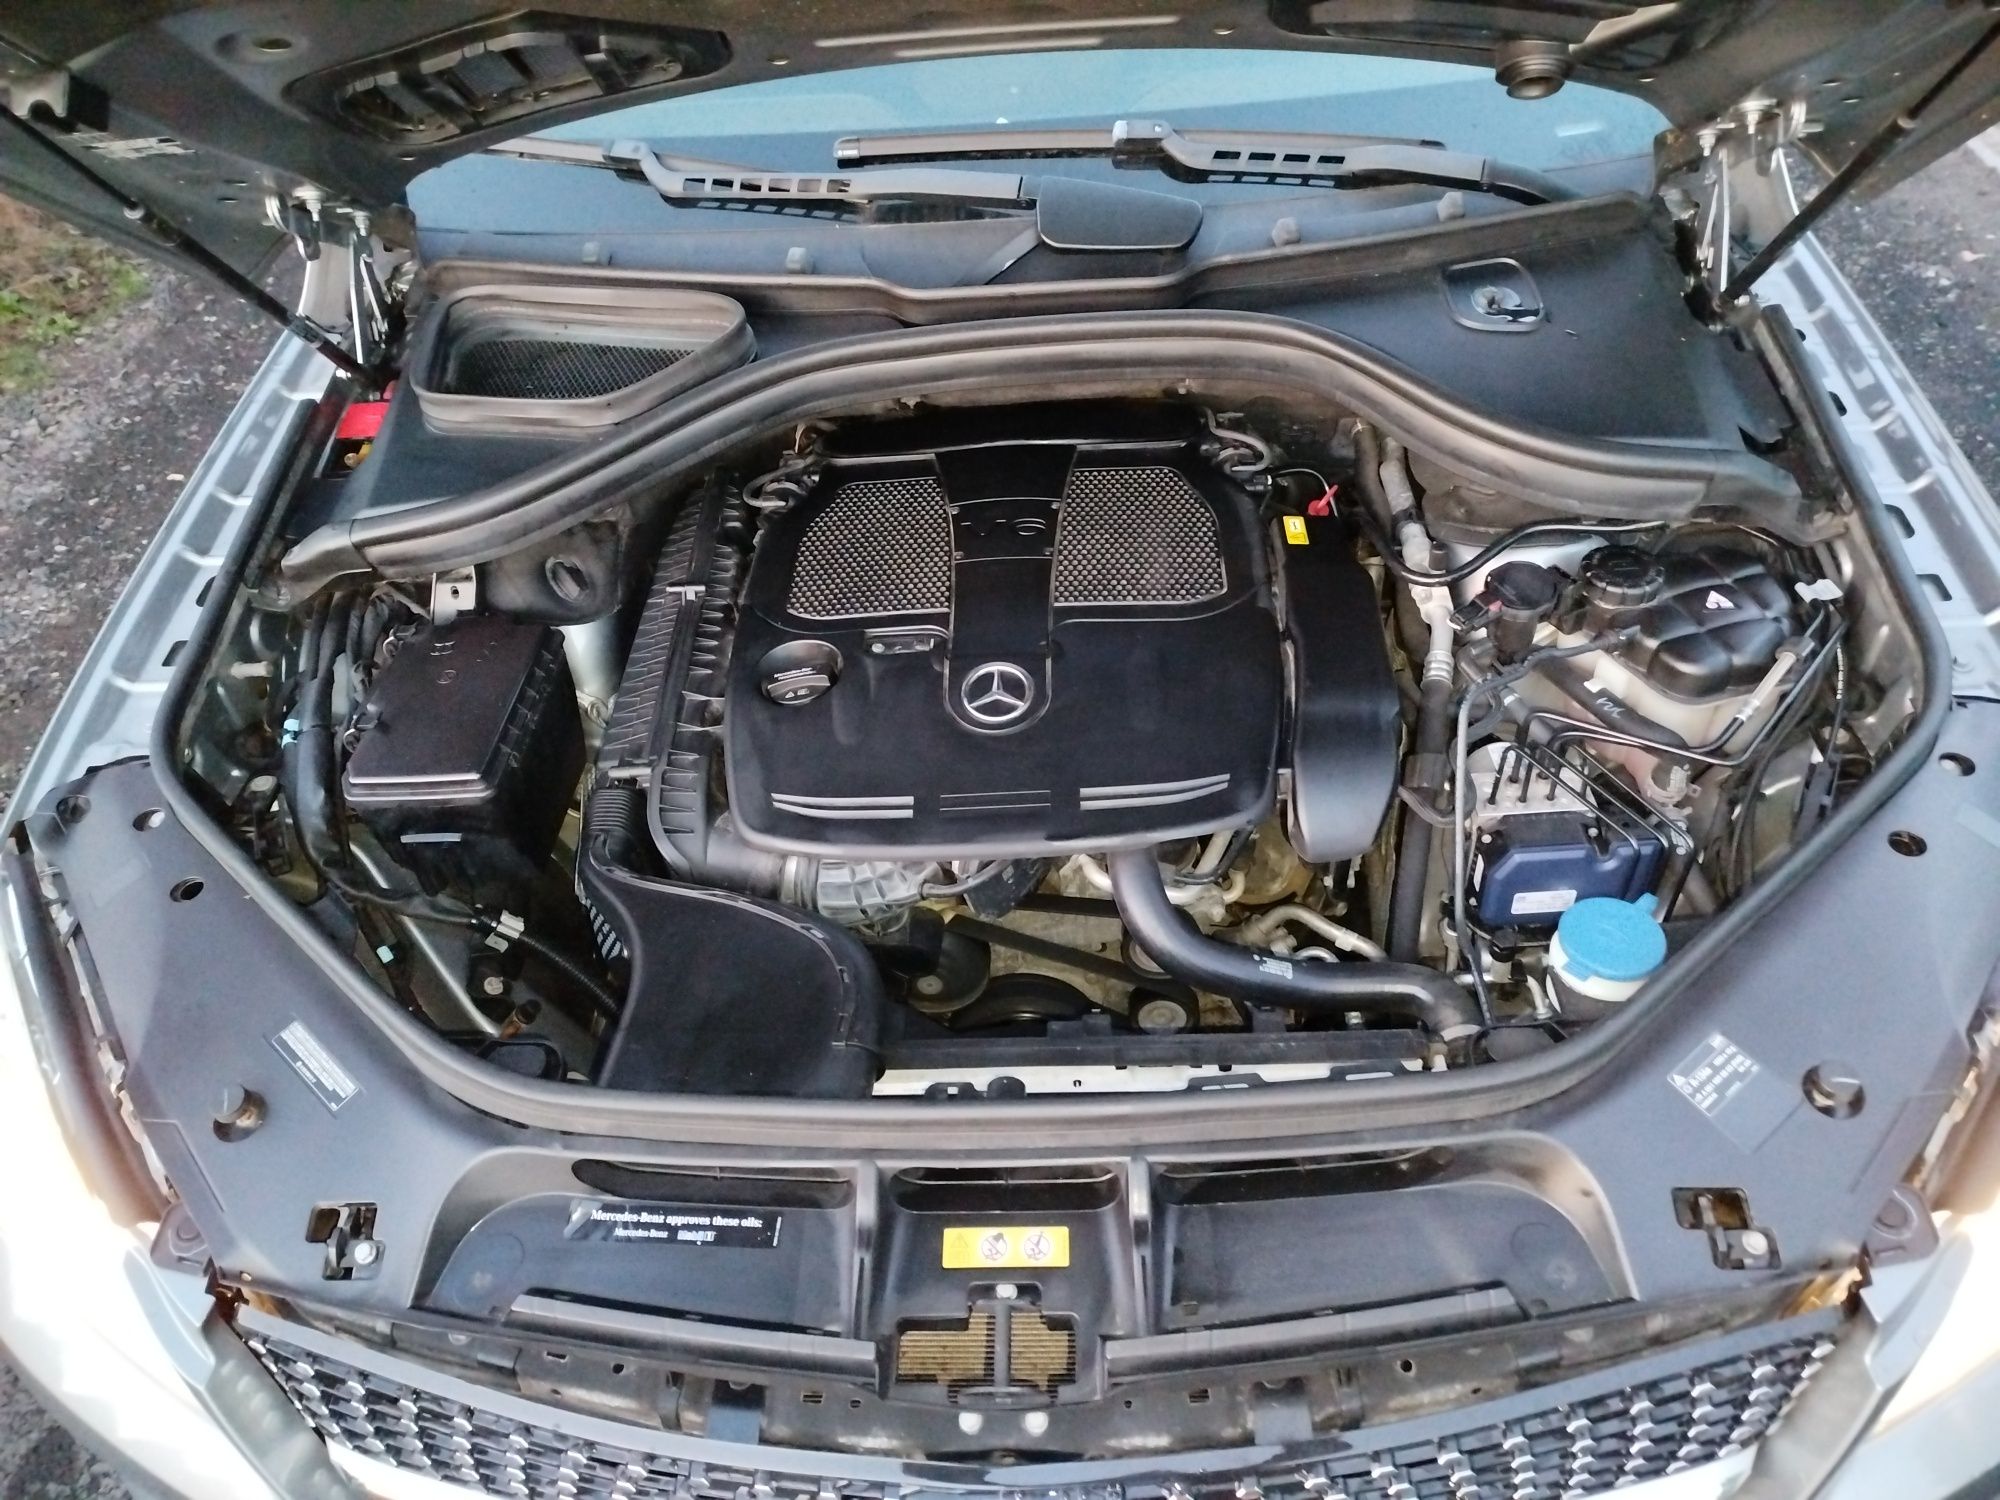 Mercedes ML350 3.5 V6 306 KM 4 matic bez pnaumatyki